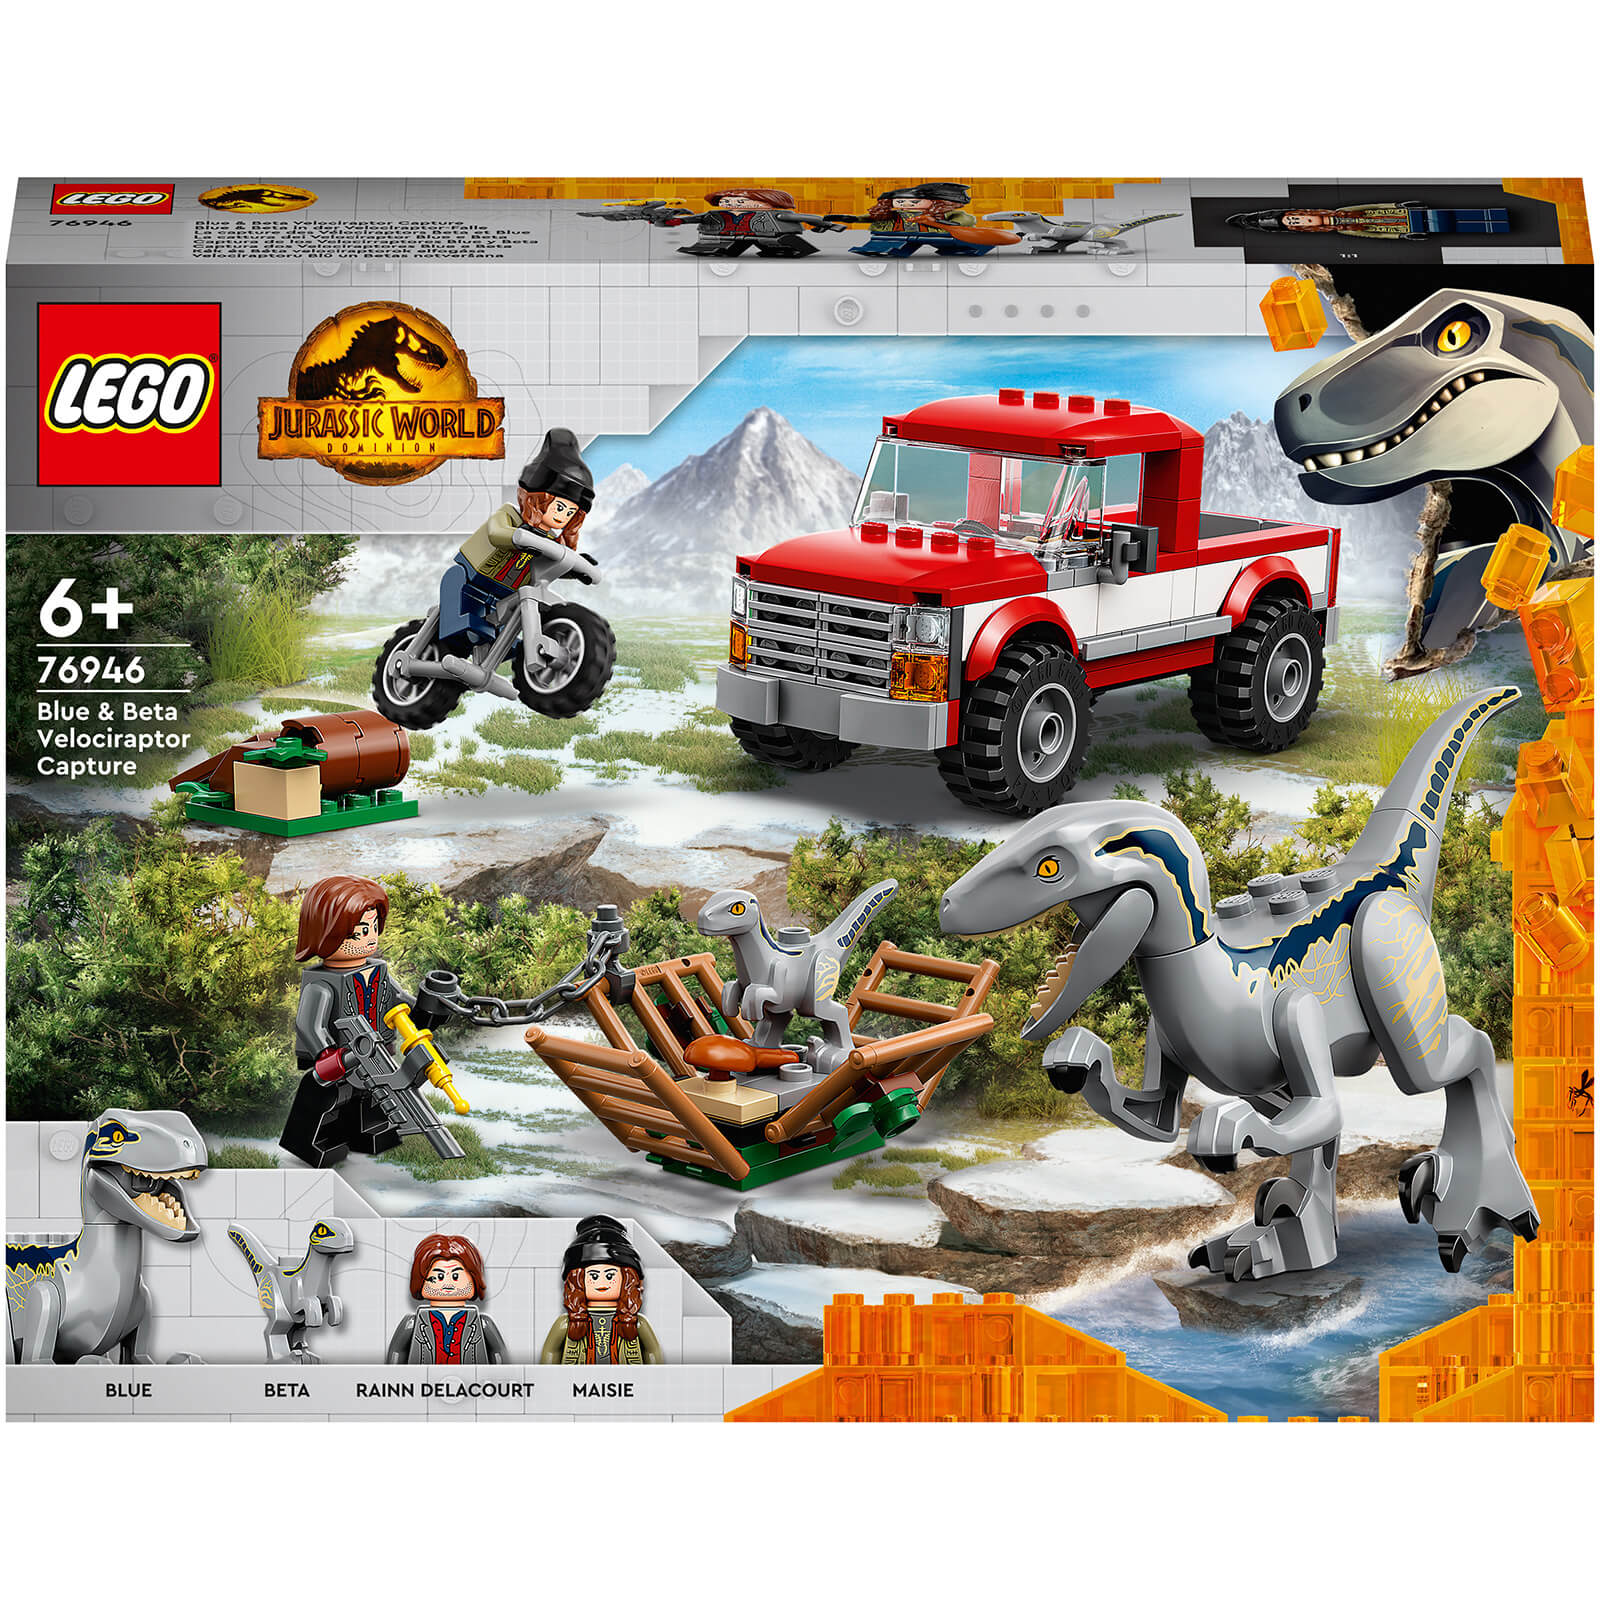 LEGO Jurassic World: Blue & Beta Velociraptor Capture Toy (76946)